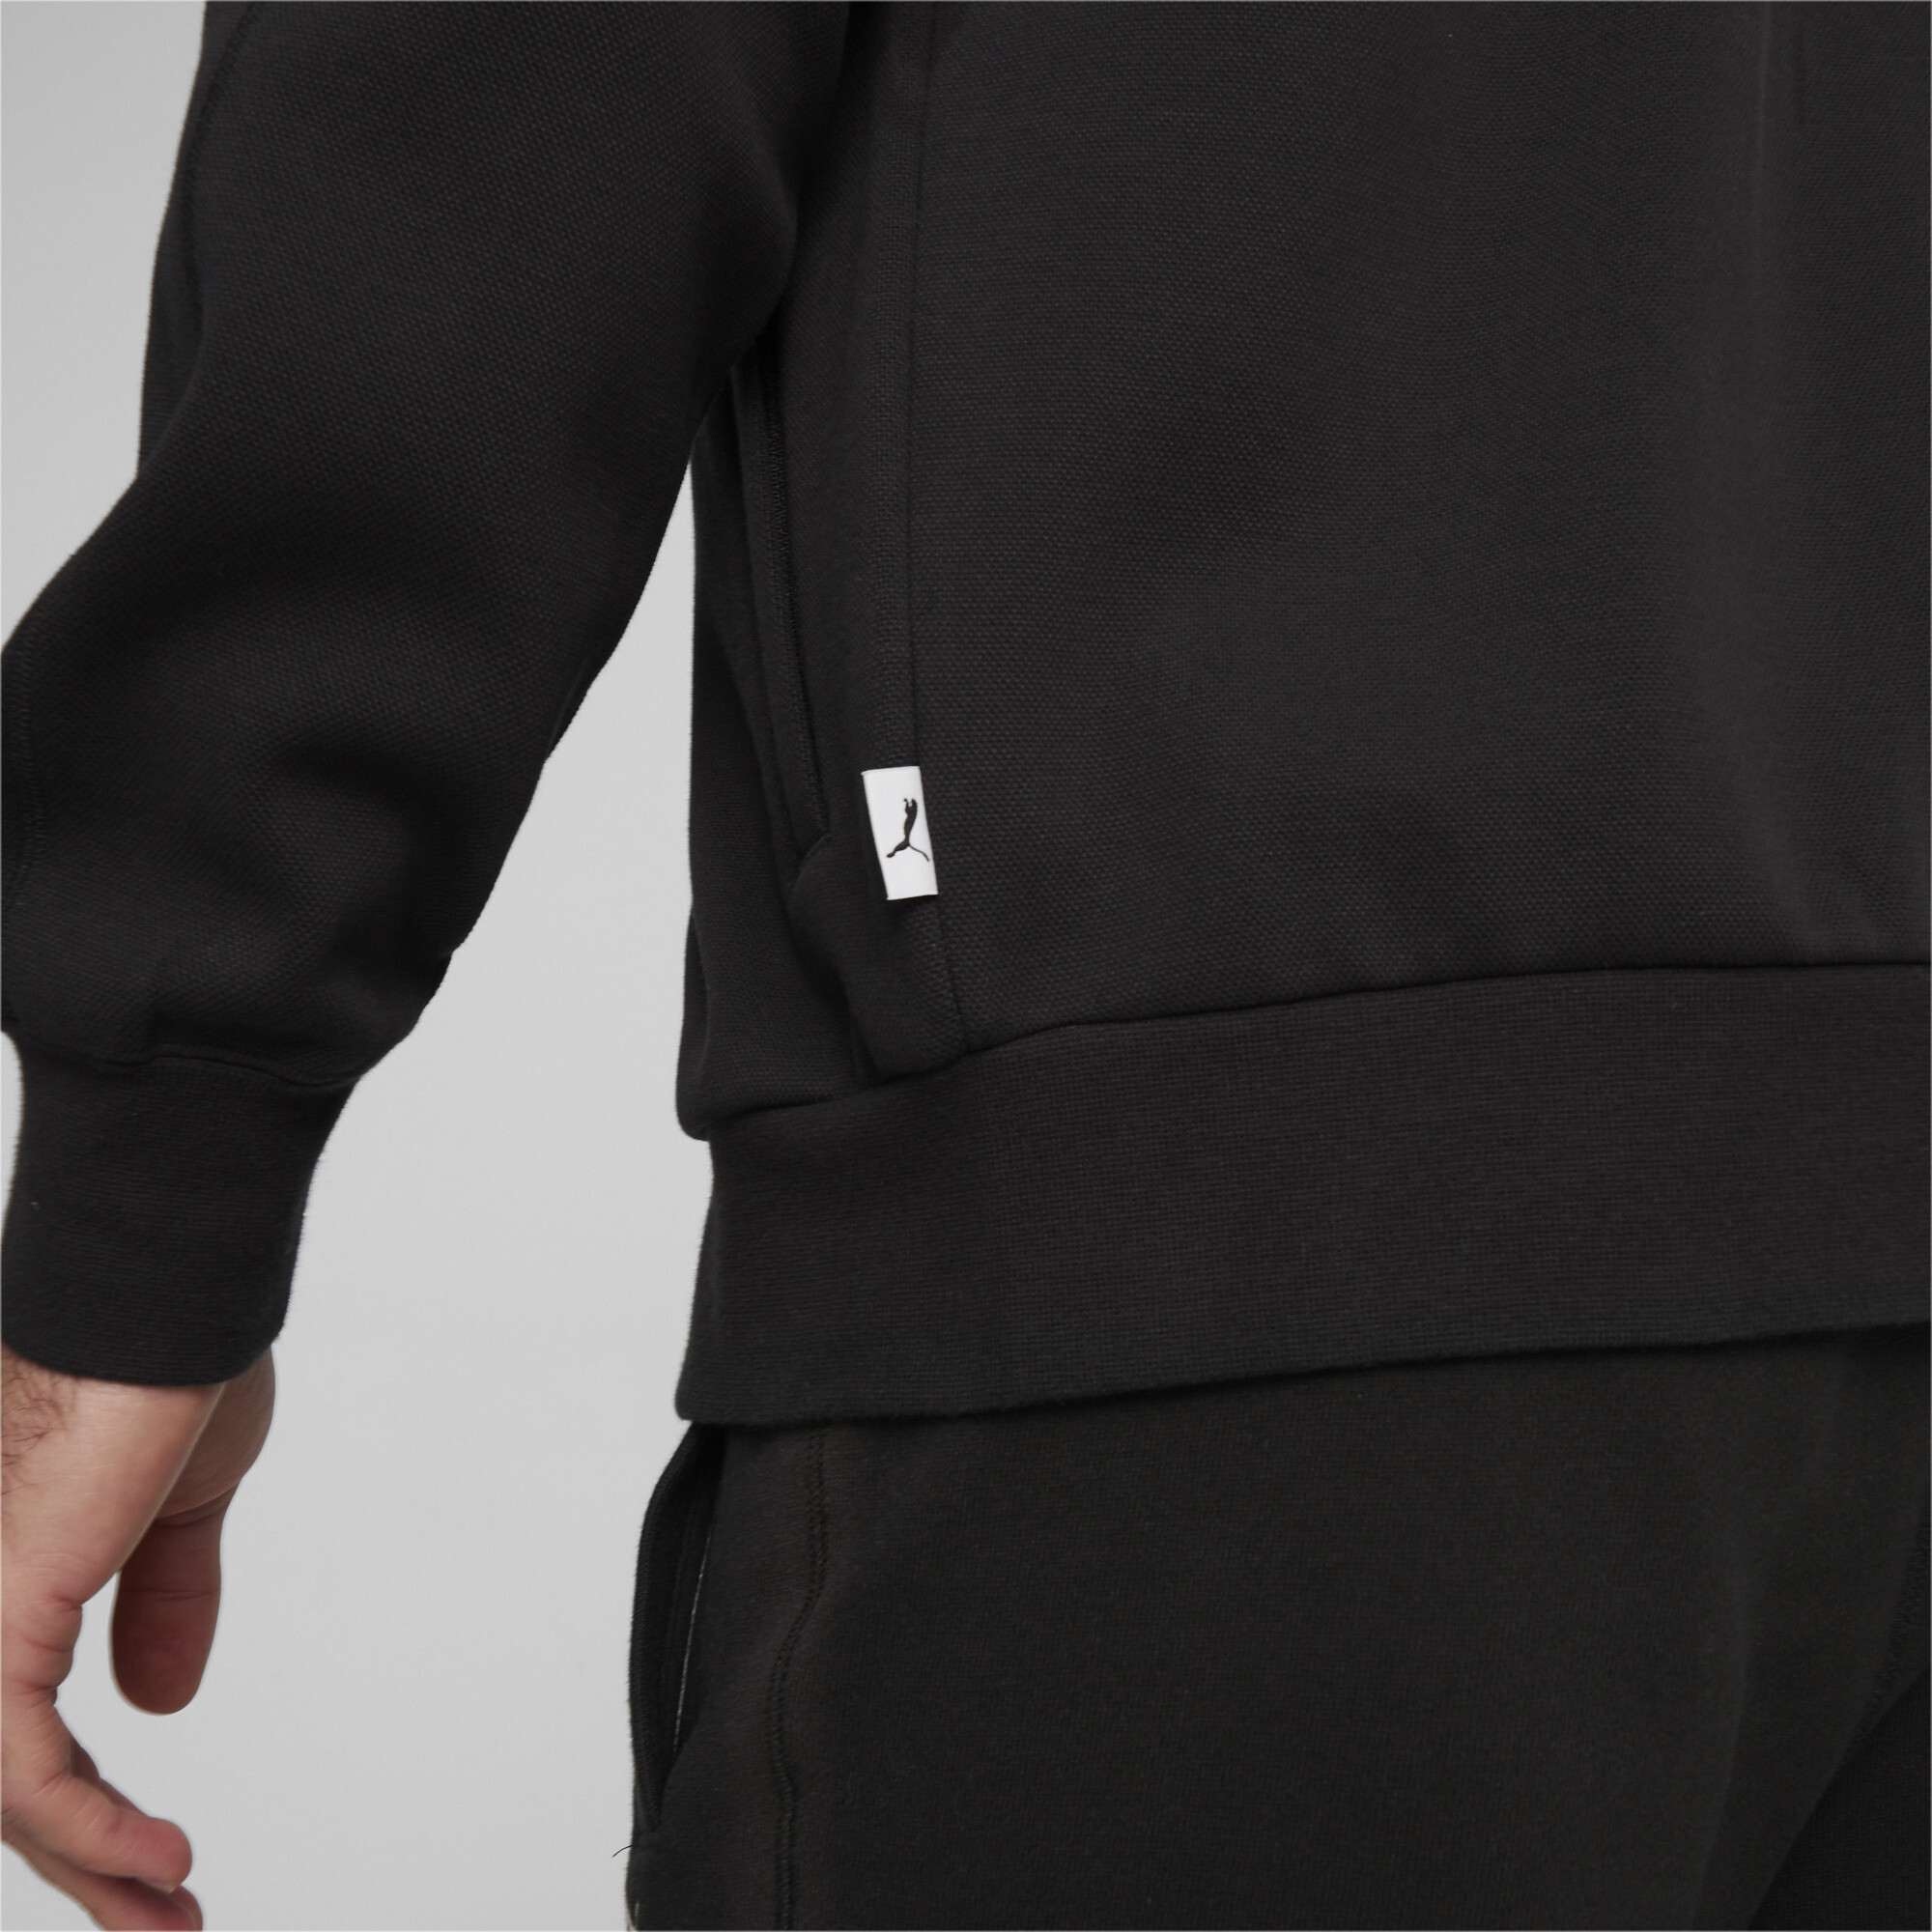 Men's PUMA MMQ T7 Track Jacket In Black, Size Large